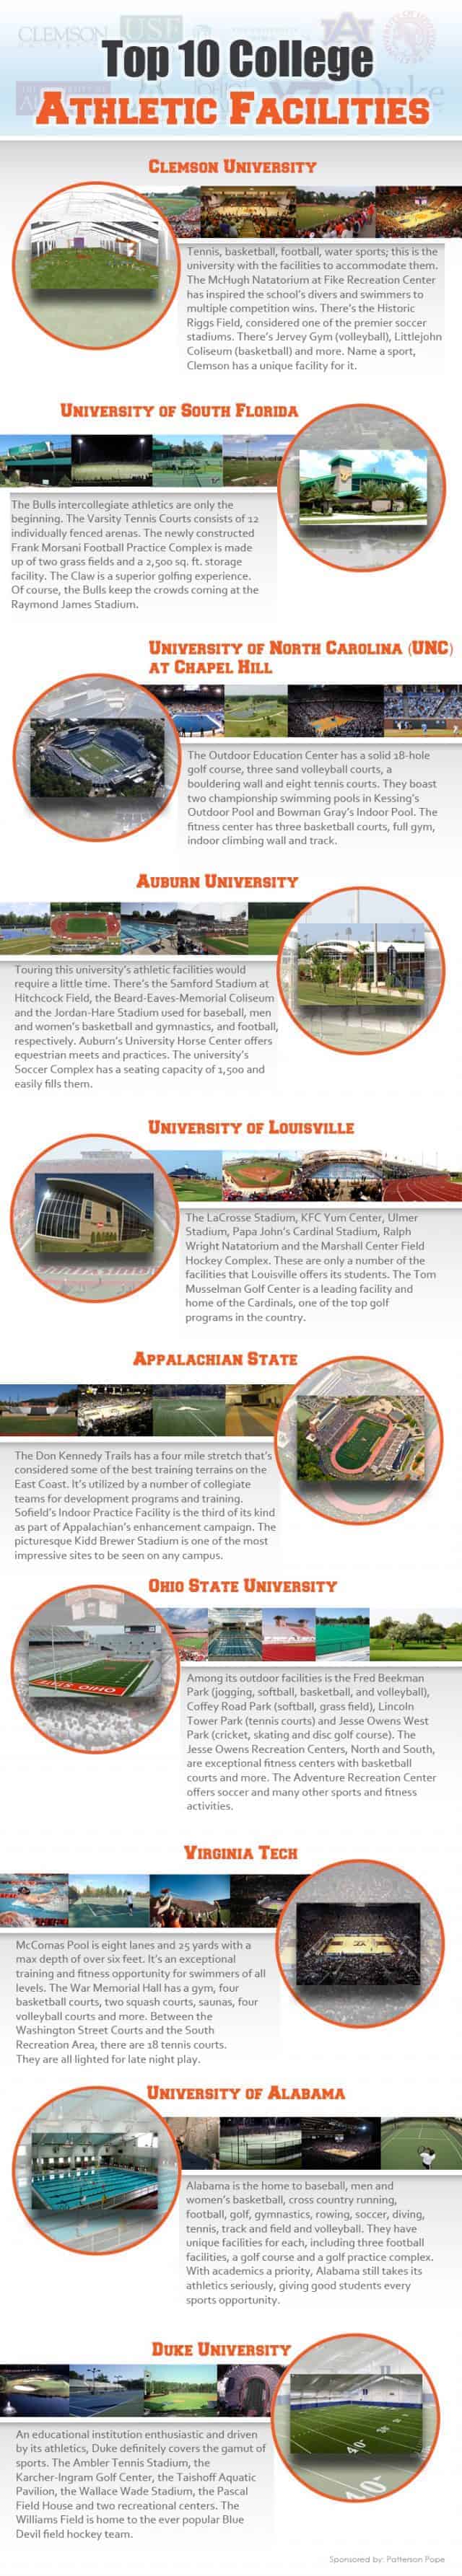 Top Ten College Athletic Facilities